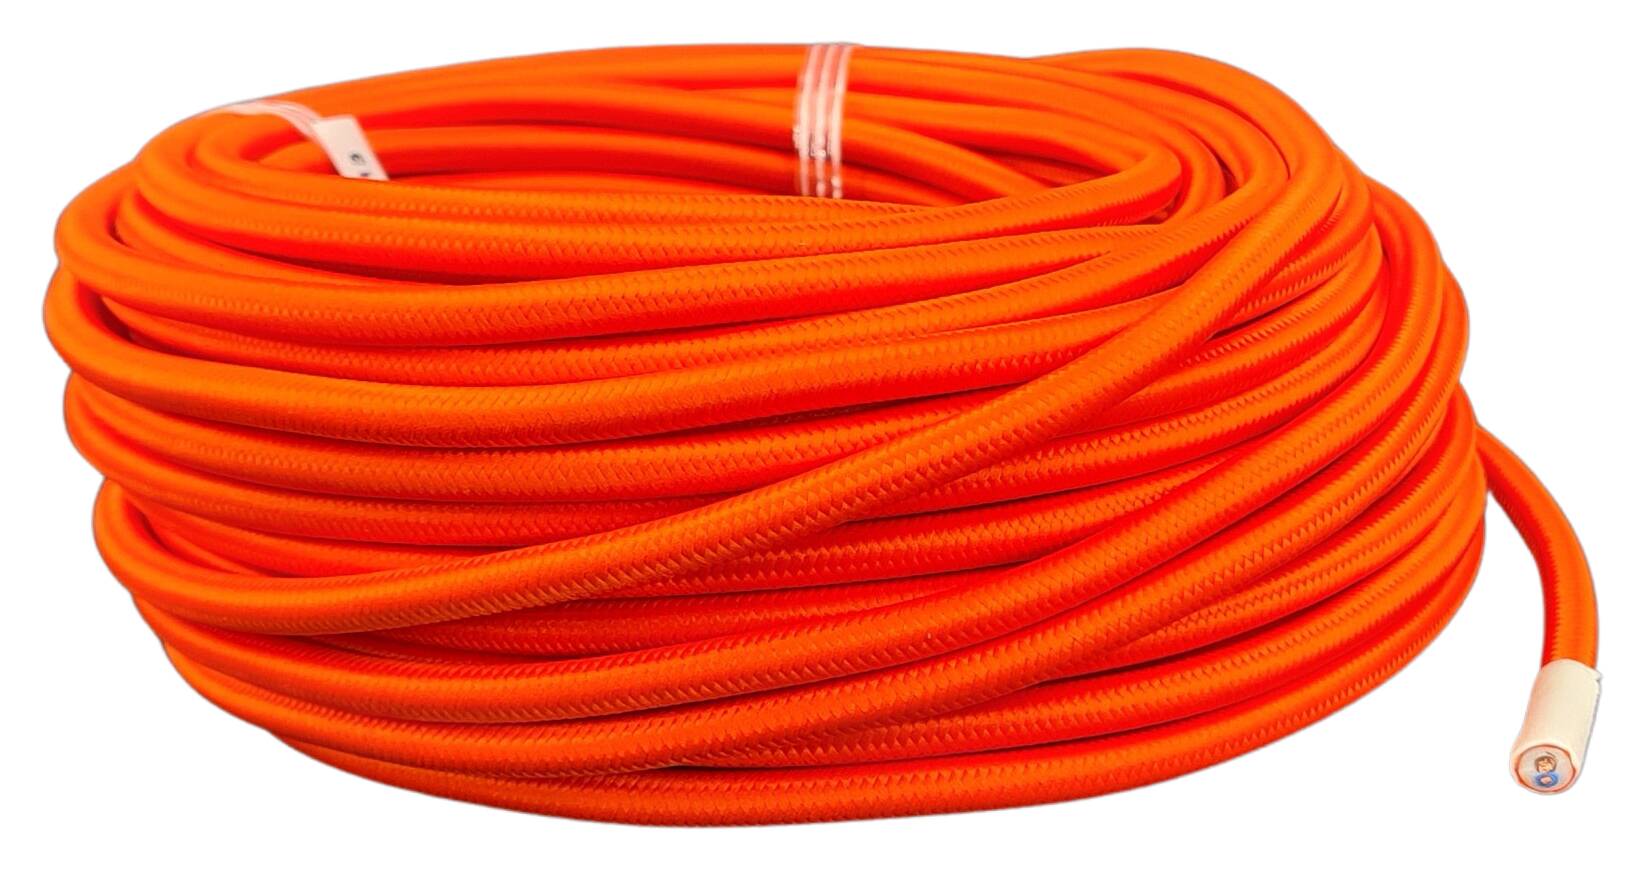 cable 3G 0,75 H33VV-F textile braided RAL 2005 dark orange